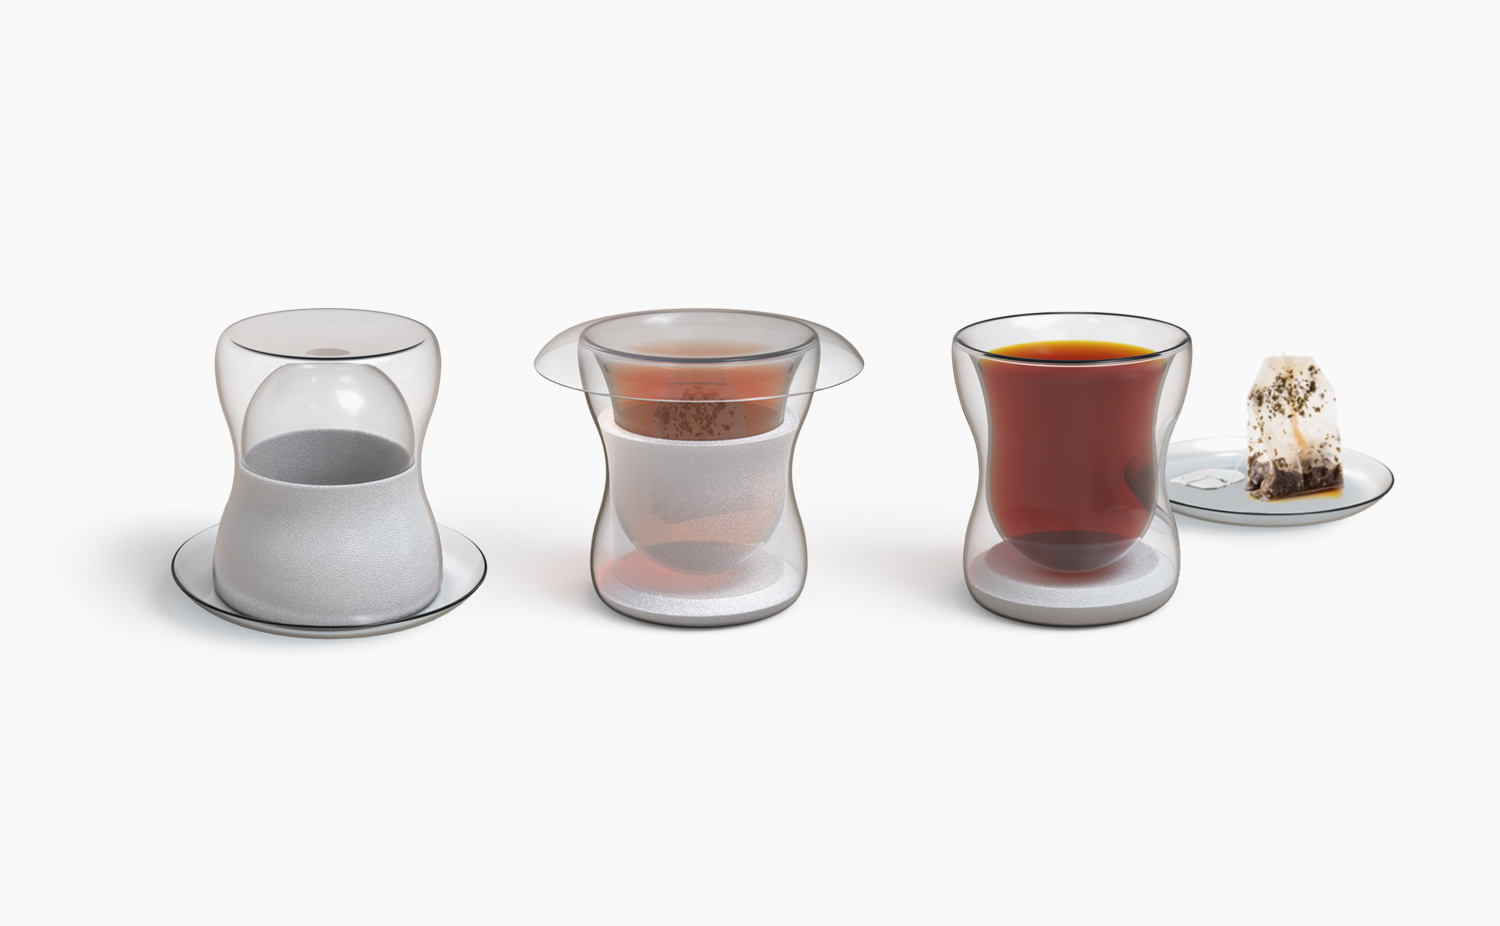 Hourglass Teacup: Main image